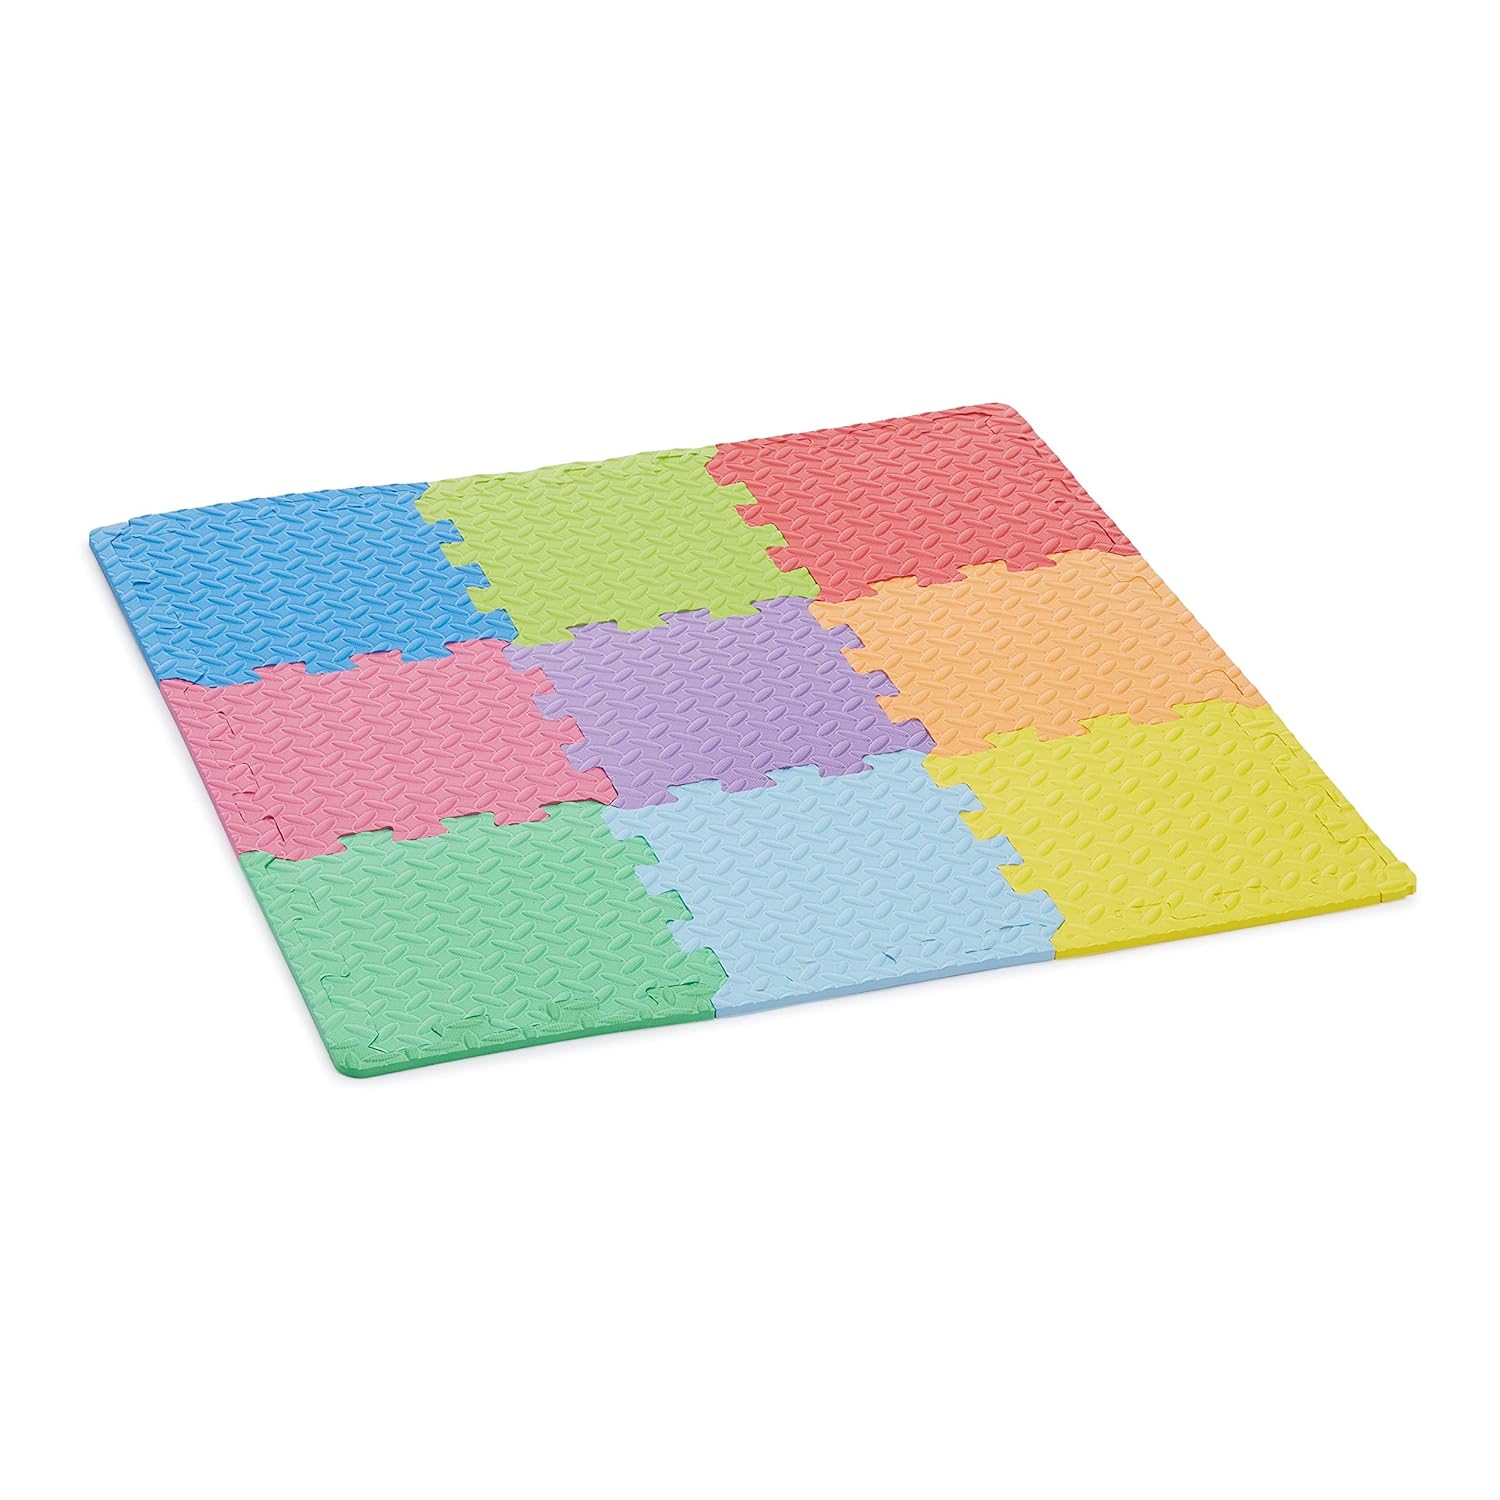 Kids Puzzle Exercise Interlocking Play Mat Eva Foam 36 Tiles 12x12 54 Borders By PAIDU